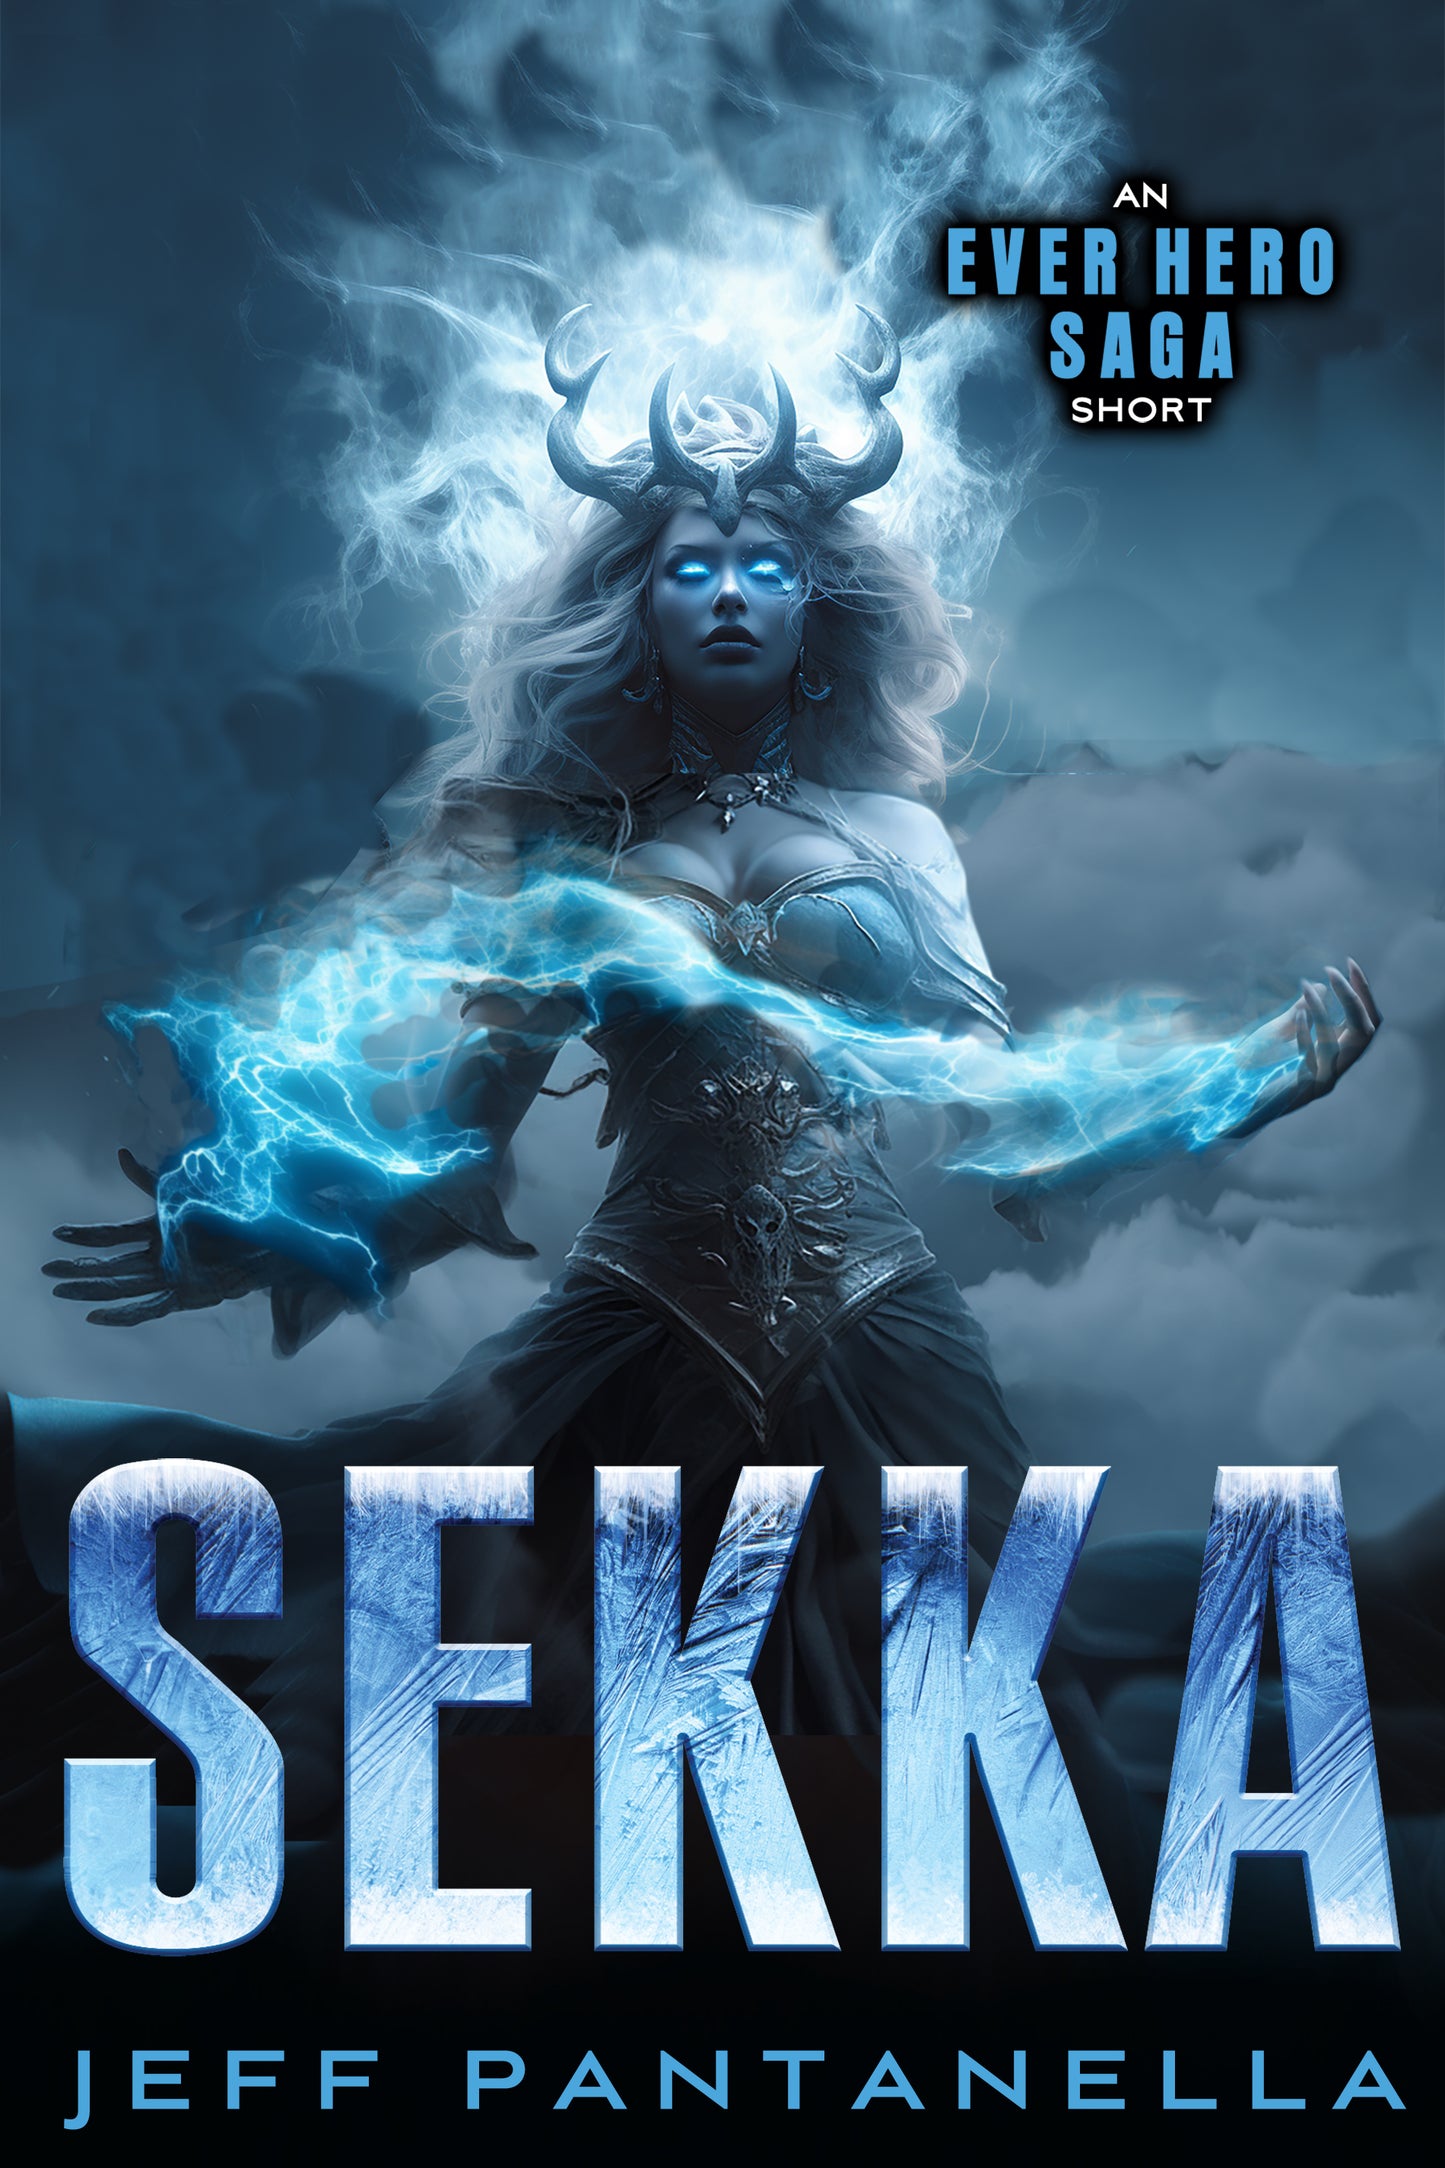 SEKKA (NOVELLA) THE EVER HERO SAGA